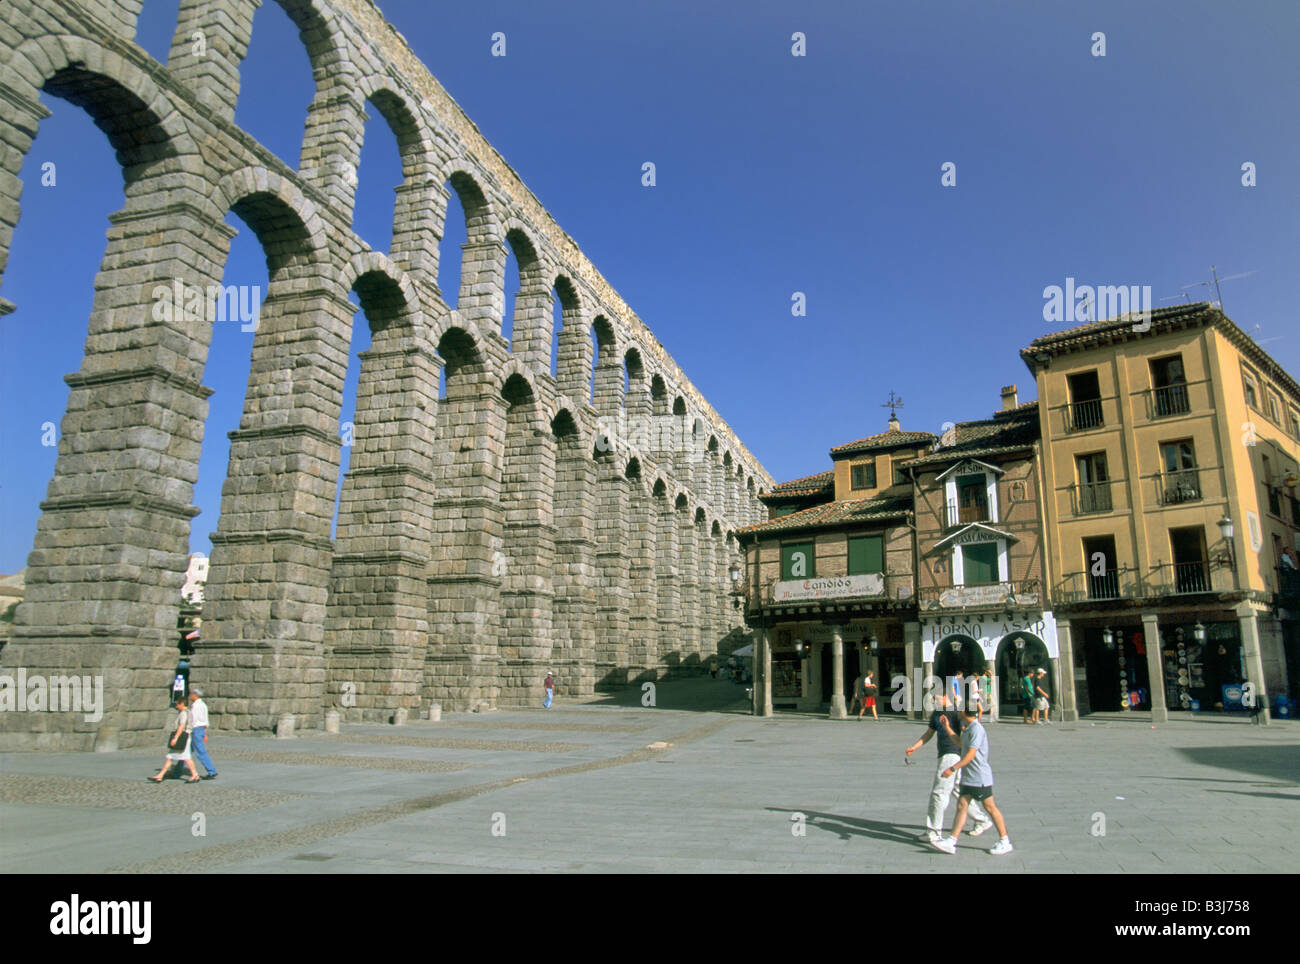 Roman Aqueduct in Segovia Castilla Leon Spain Stock Photo